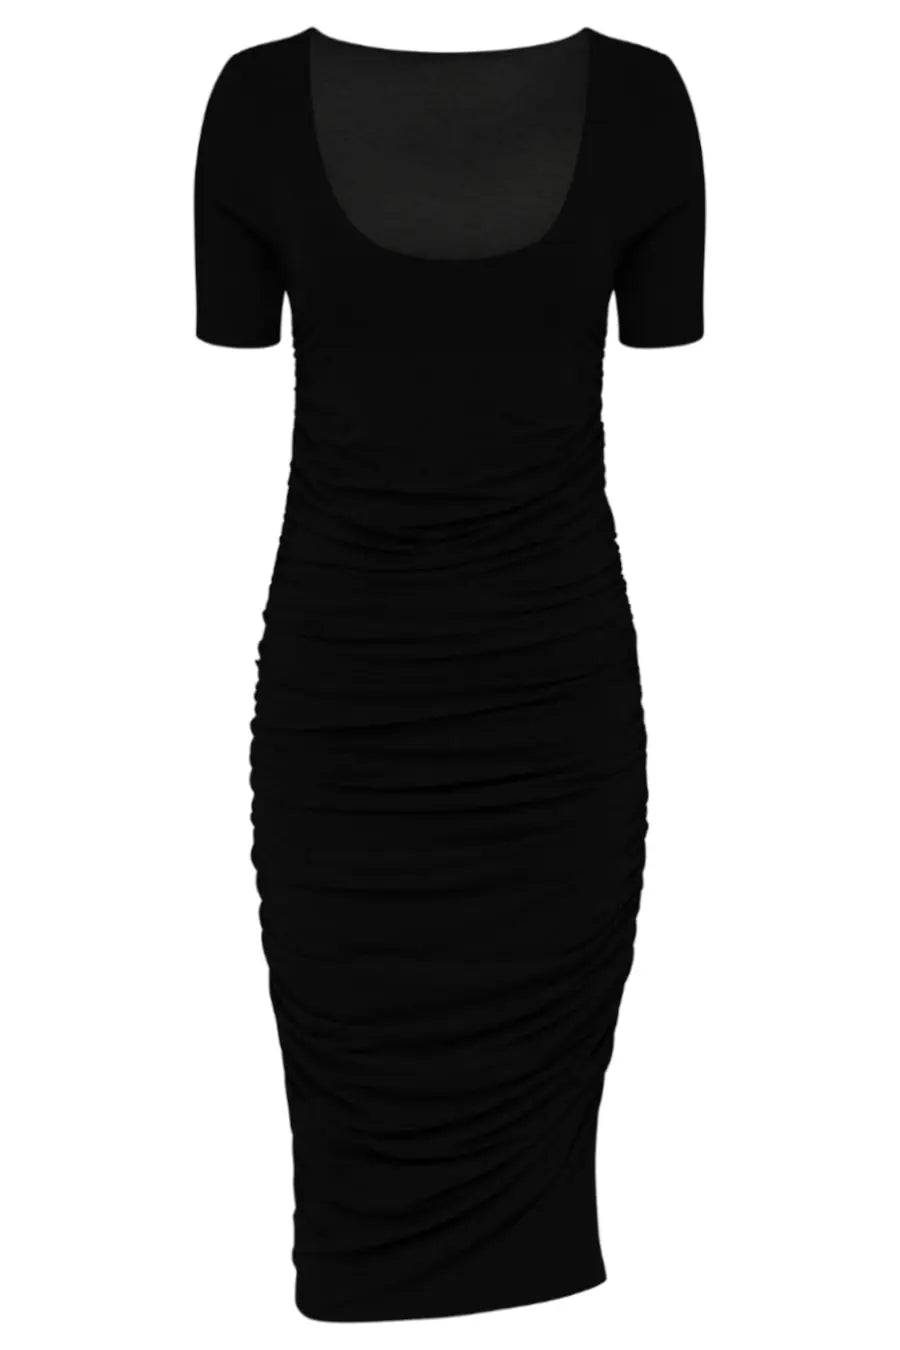 Embodycon™ Shaping Bodycon Dress - Black